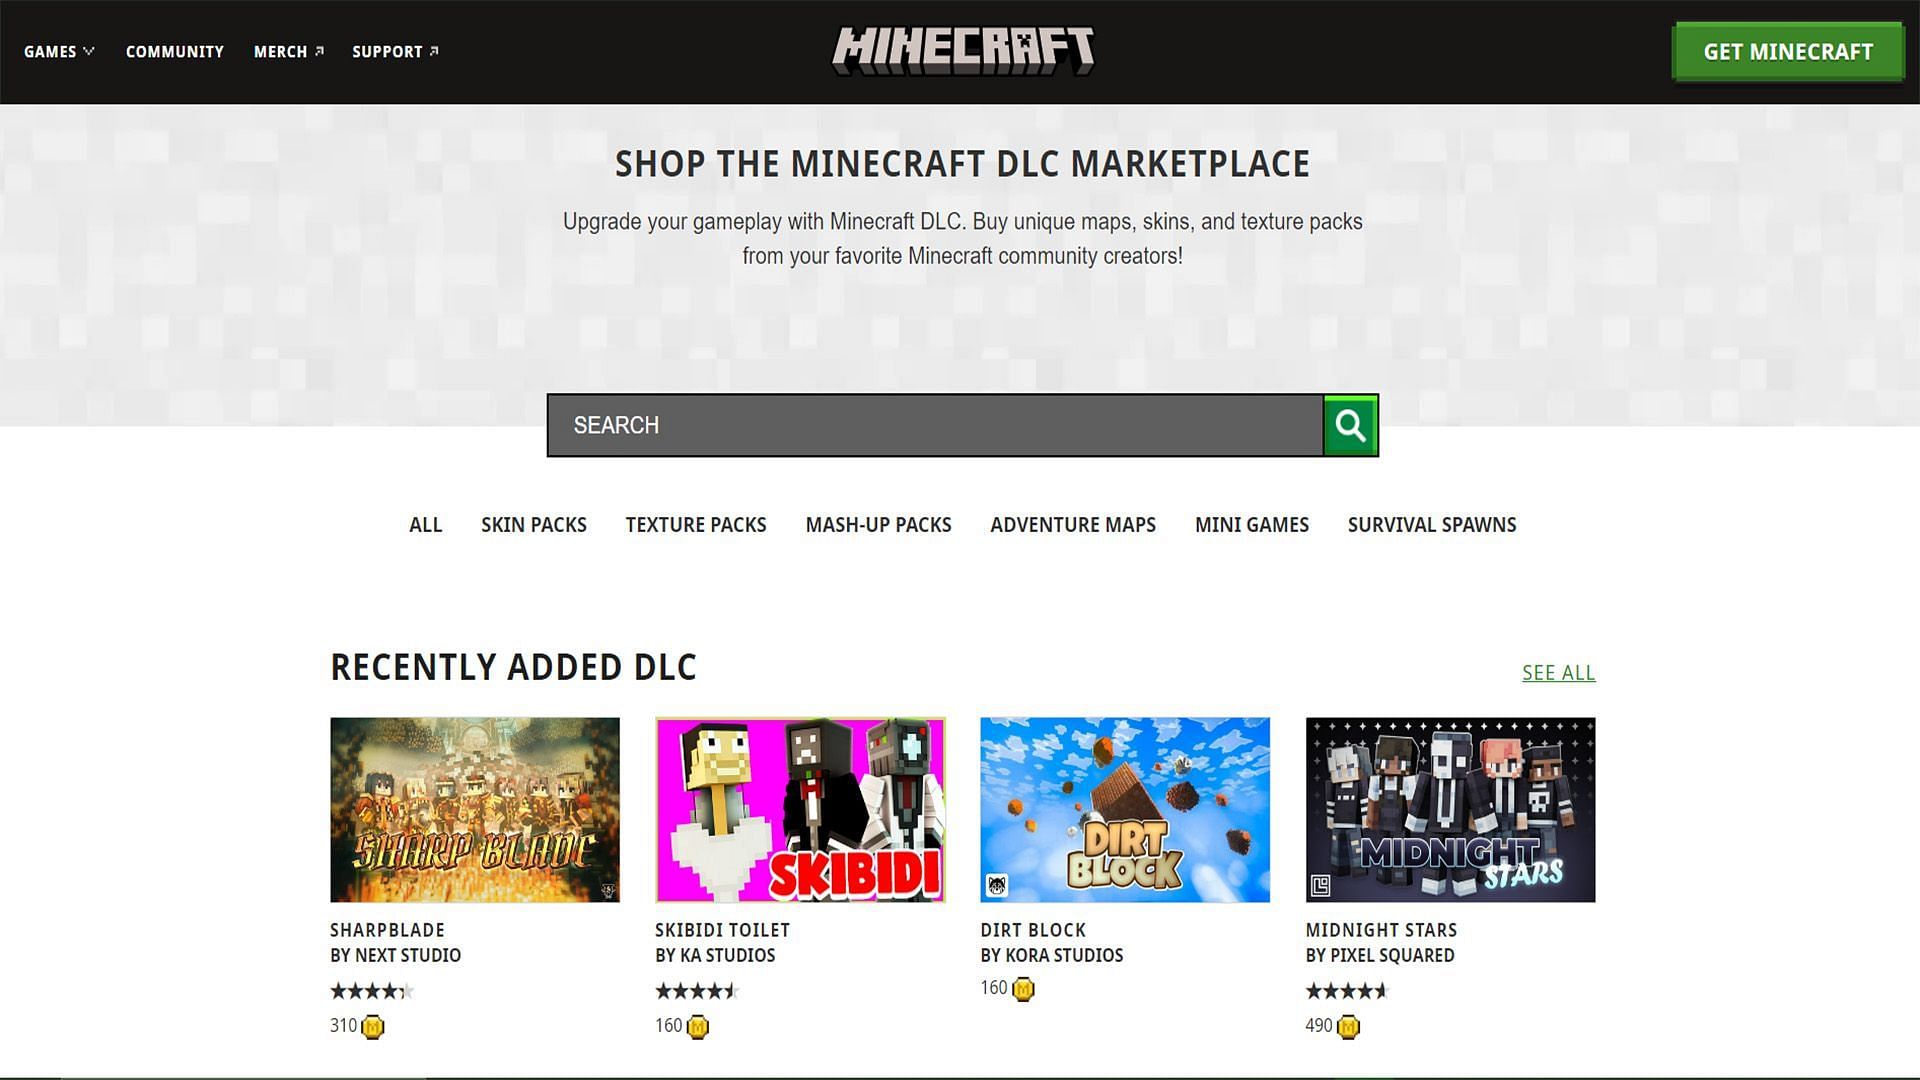 Nerf Expands into Braziland Minecraft DLC?